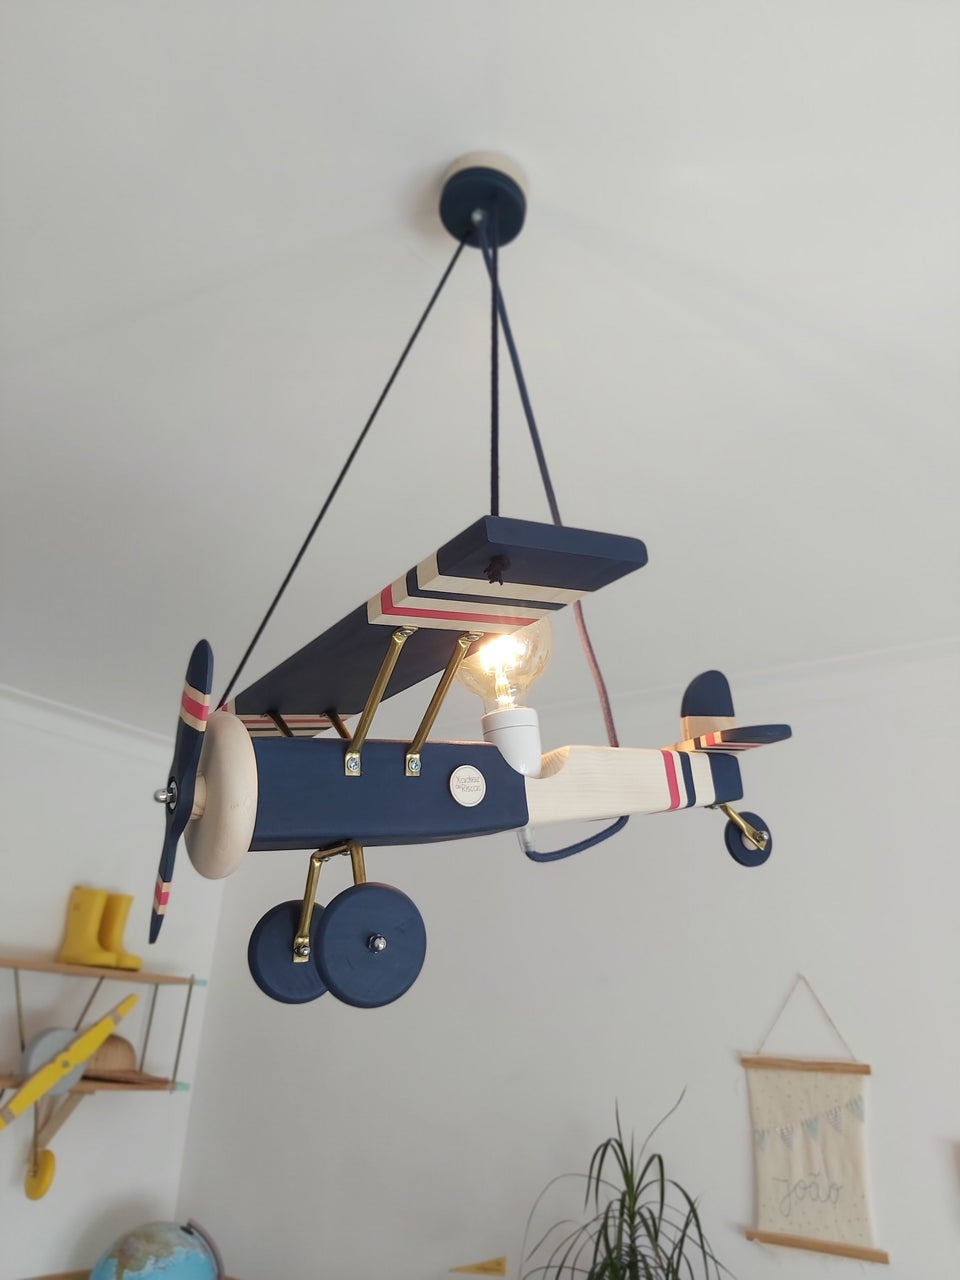 Candeeiro Avião Tecto Azul Oxford / Encarnado  - Ceiling Airplane Lamp Oxford Blue / Red